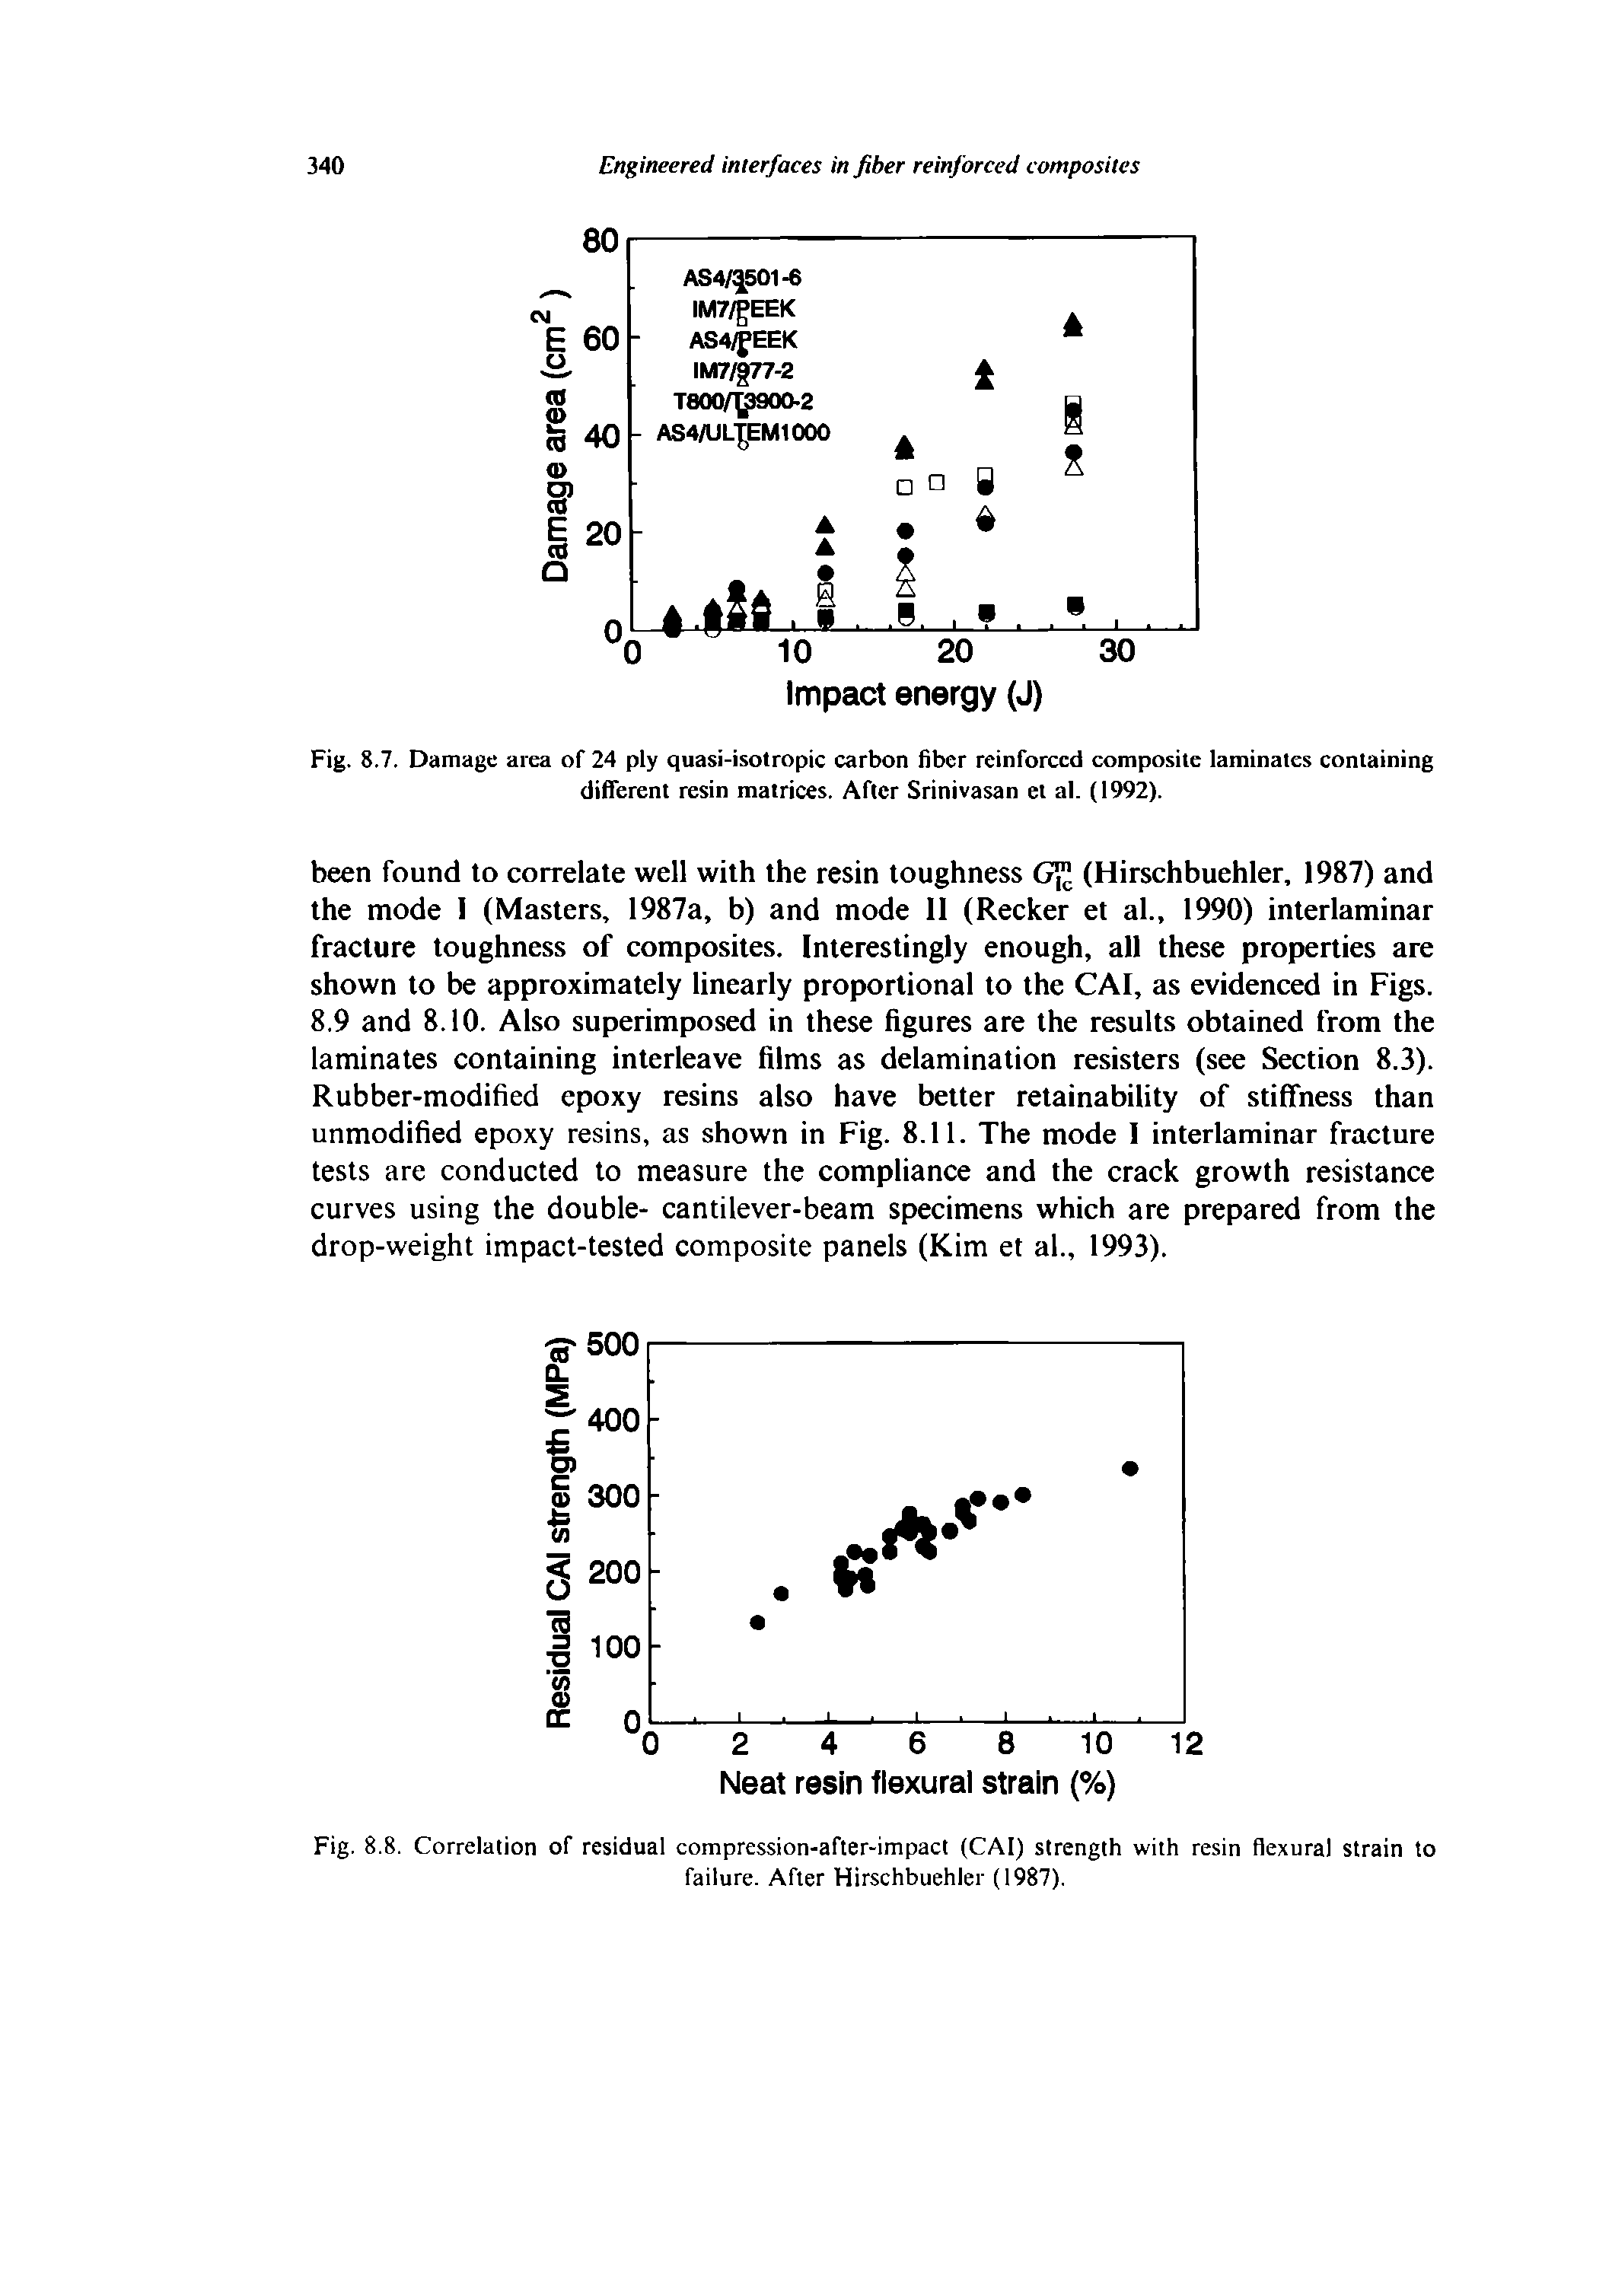 Fig. 8.7. Damage area of 24 ply quasi-isotropic carbon fiber reinforced composite laminates containing different resin matrices. After Srinivasan et al. (1992).